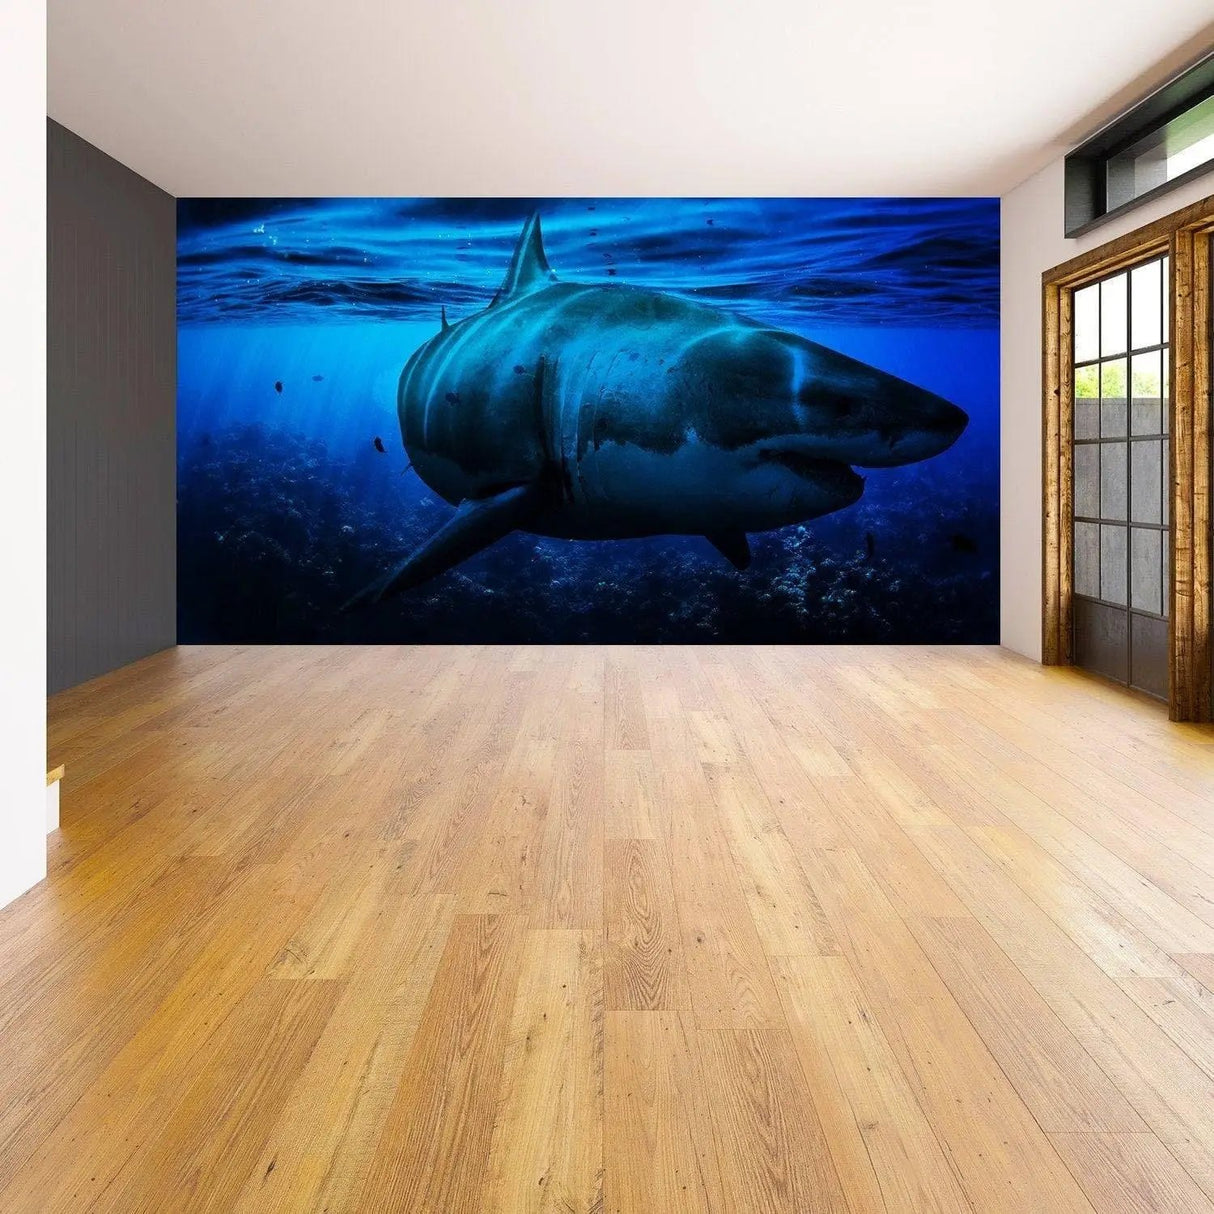 U-Shark 3D Self-Adhesive Removable Break Through The Wall Vinyl Wall S